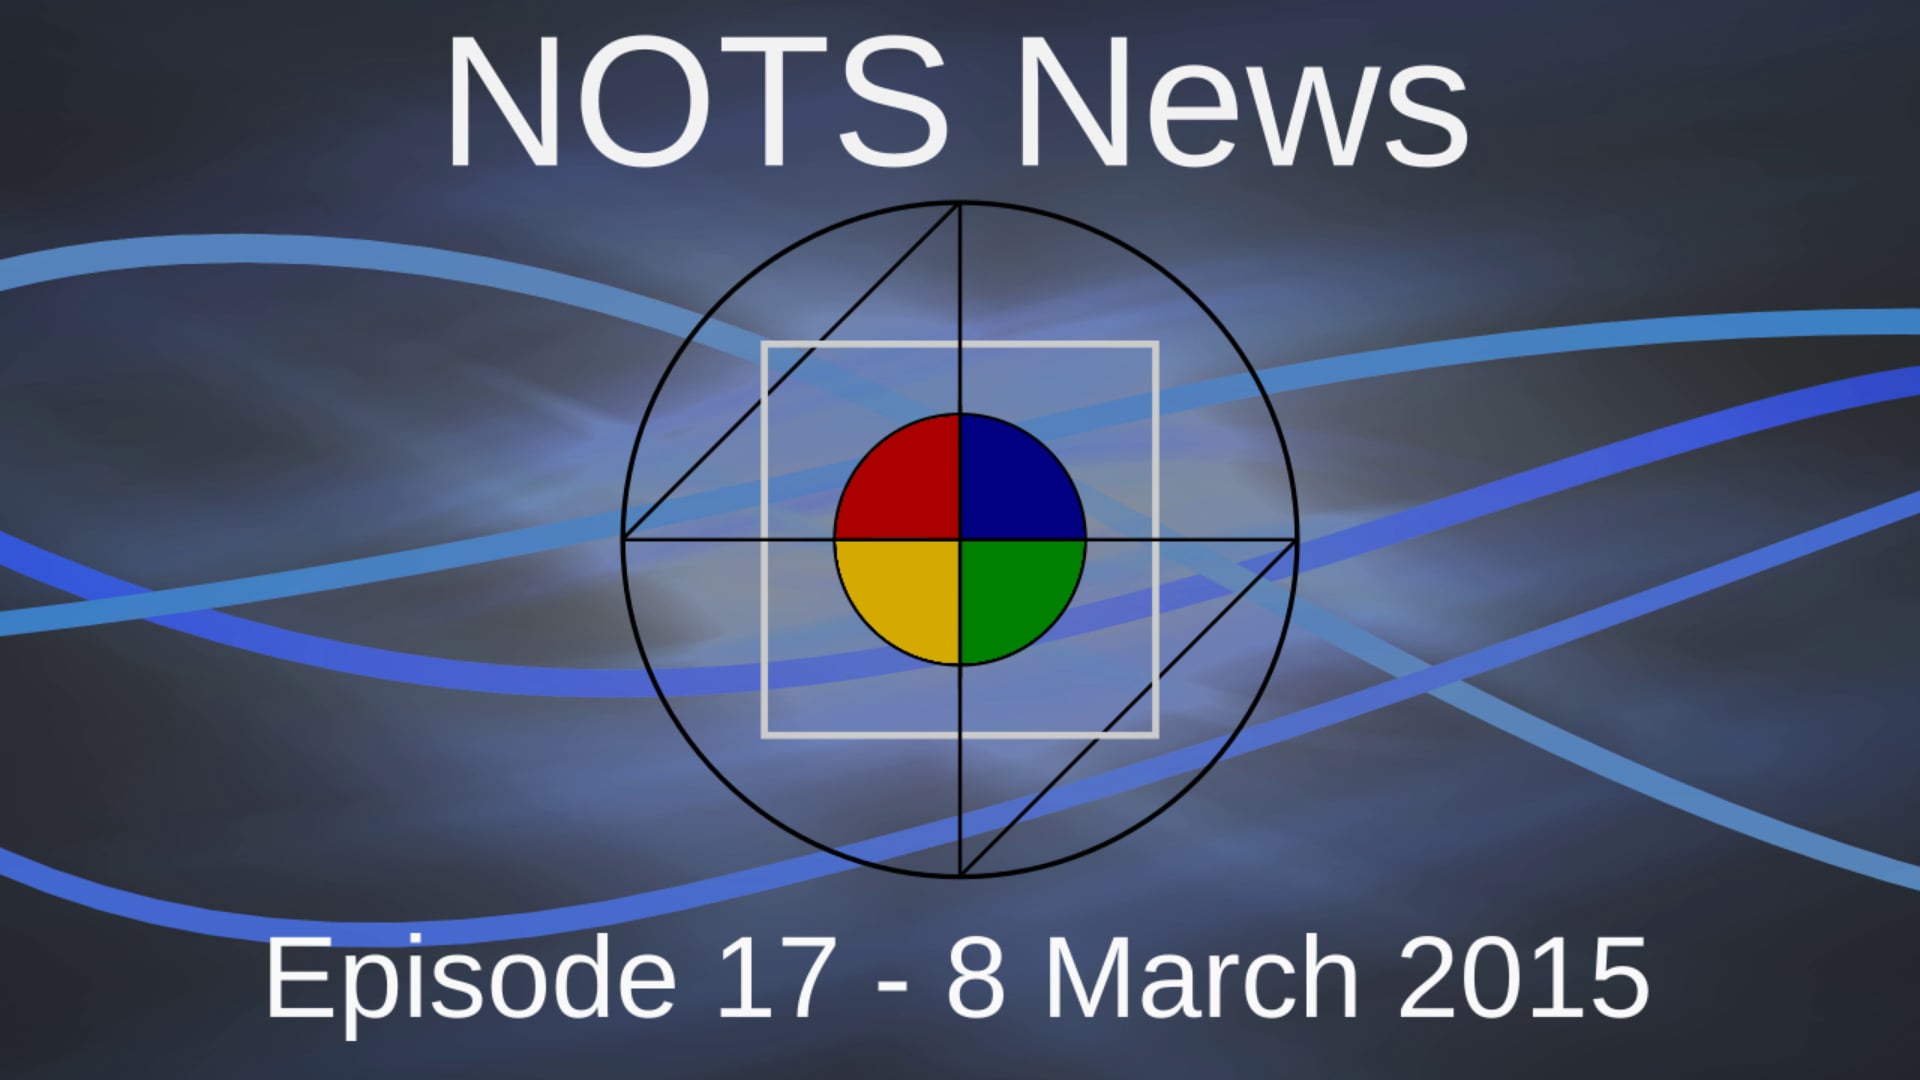 8 March 2015 - NOTS News